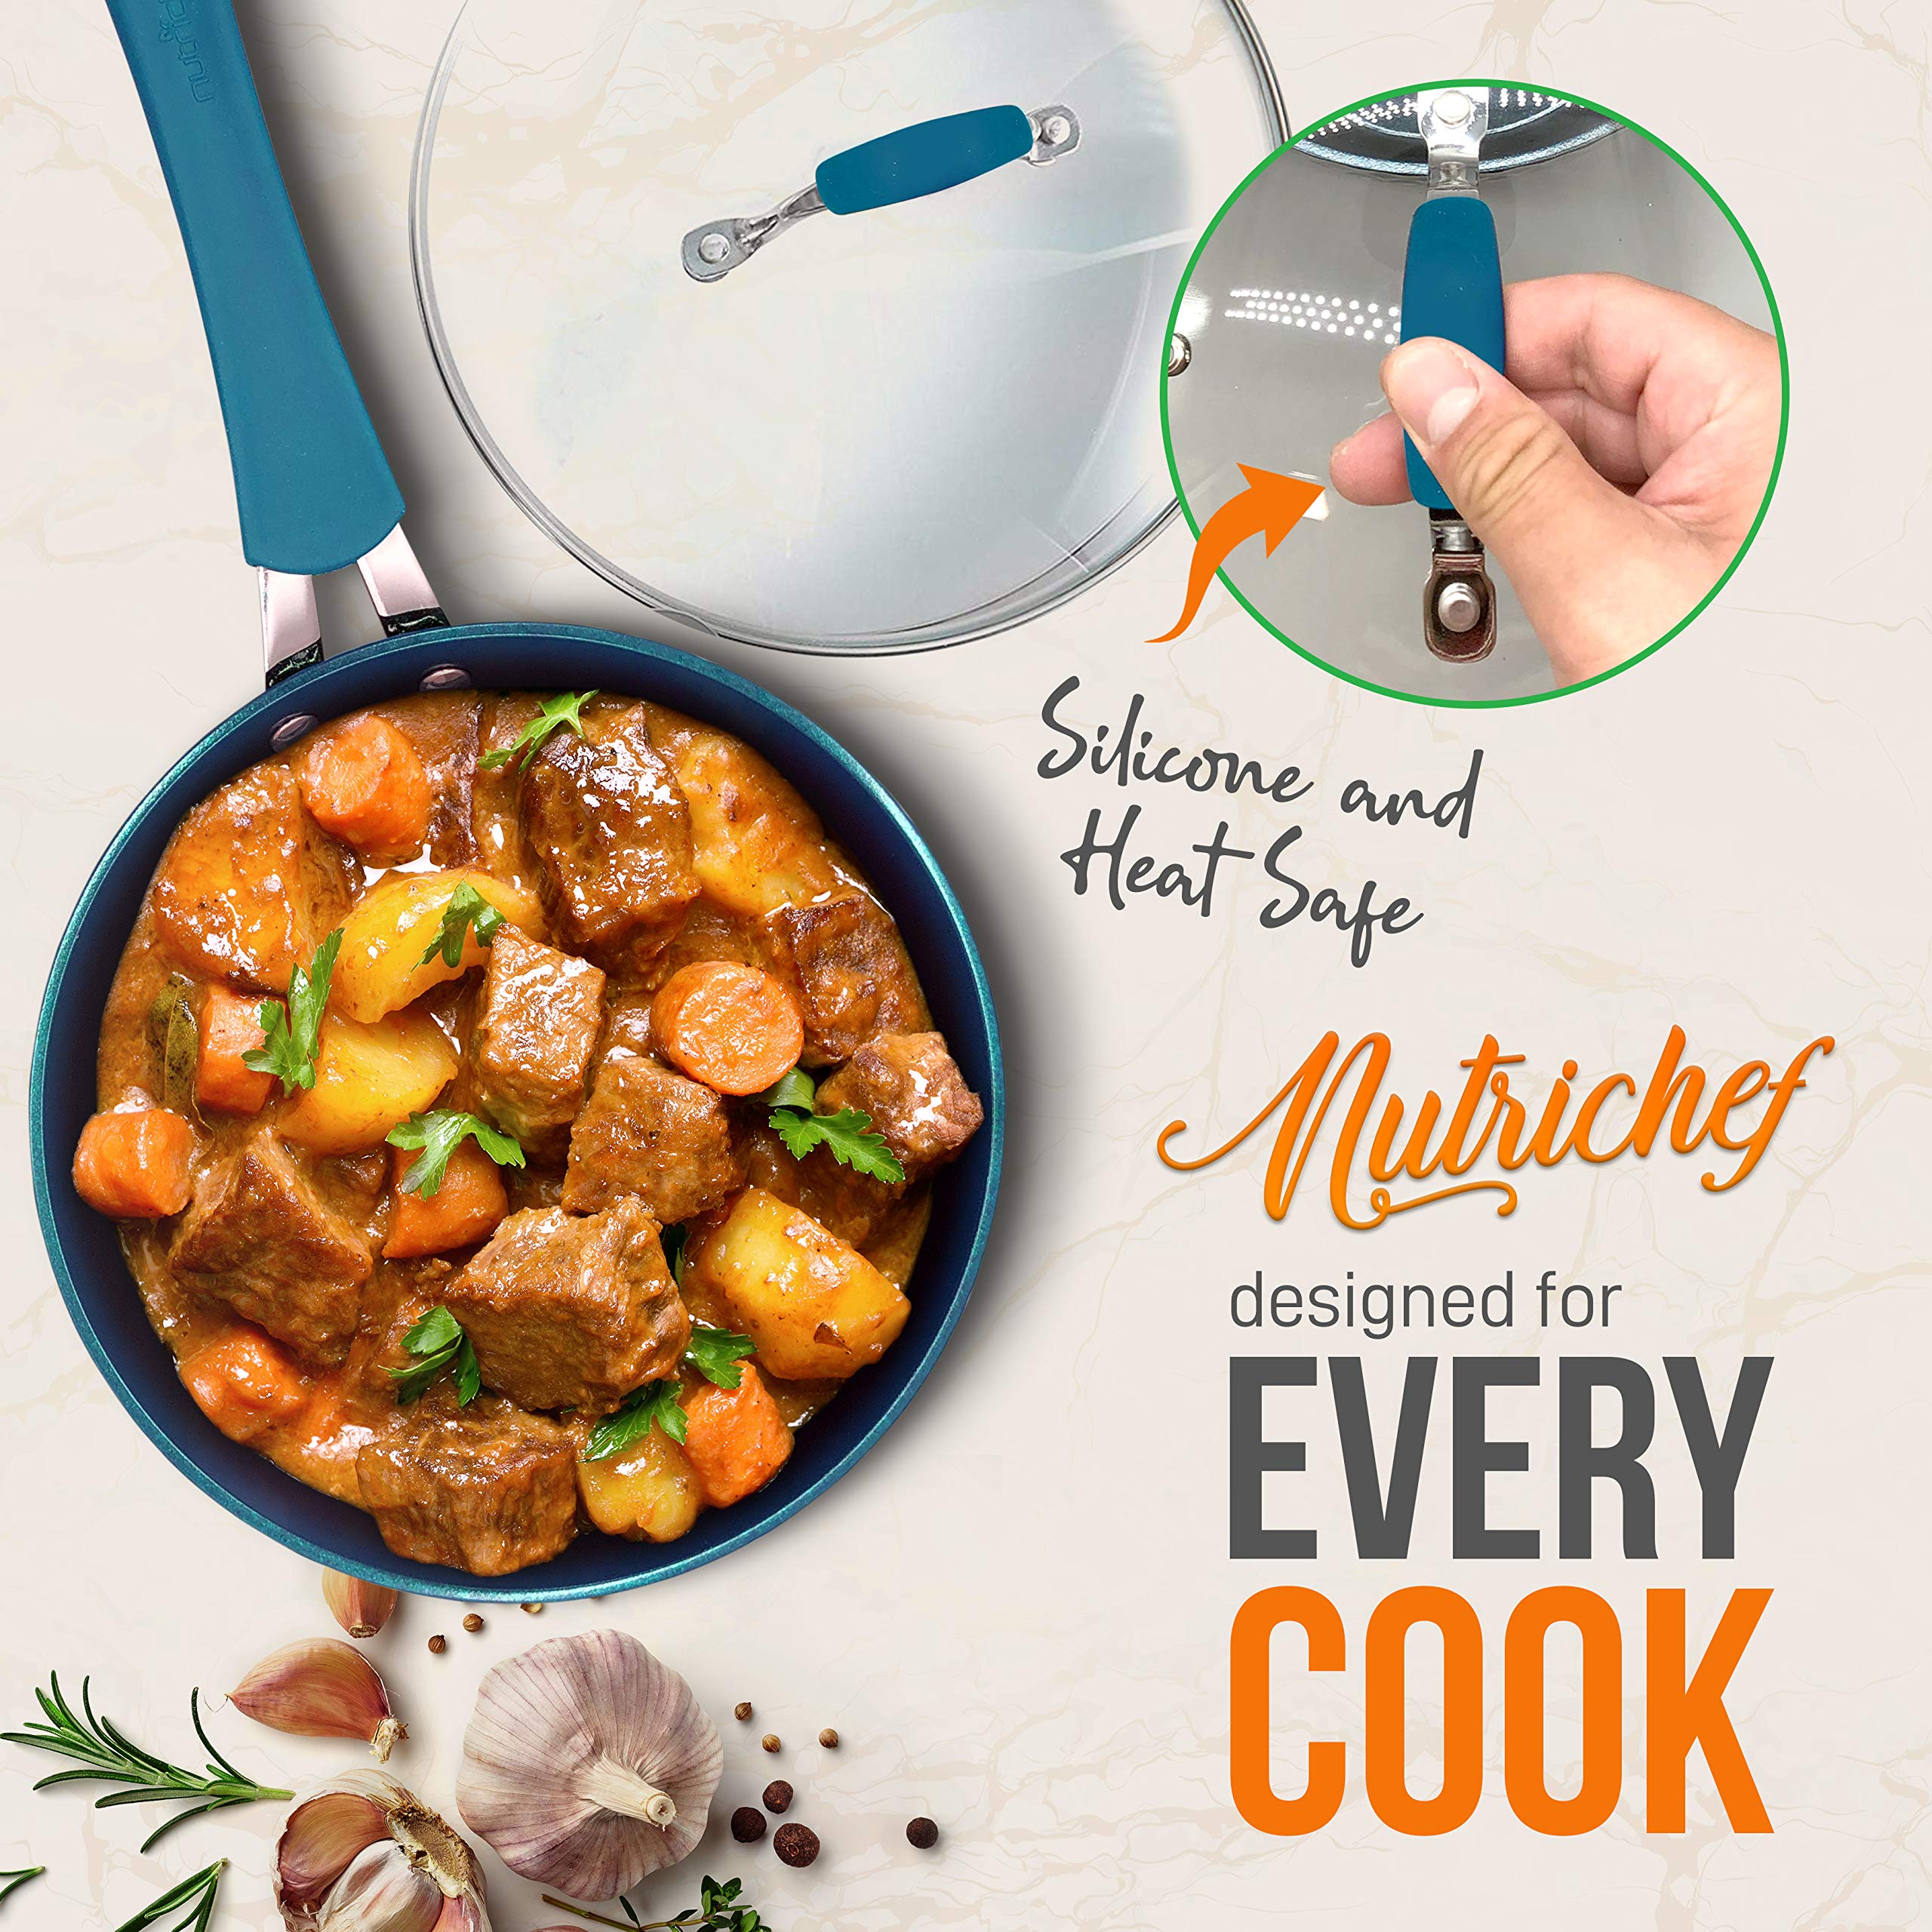 NutriChef Nonstick Cookware Excilon | Home Kitchen Ware Pots & Pan Set with Saucepan, Frying Pans, Cooking Pots, Lids, Utensil PTFE/PFOA/PFOS Free, 11 Pcs, Royal Blue